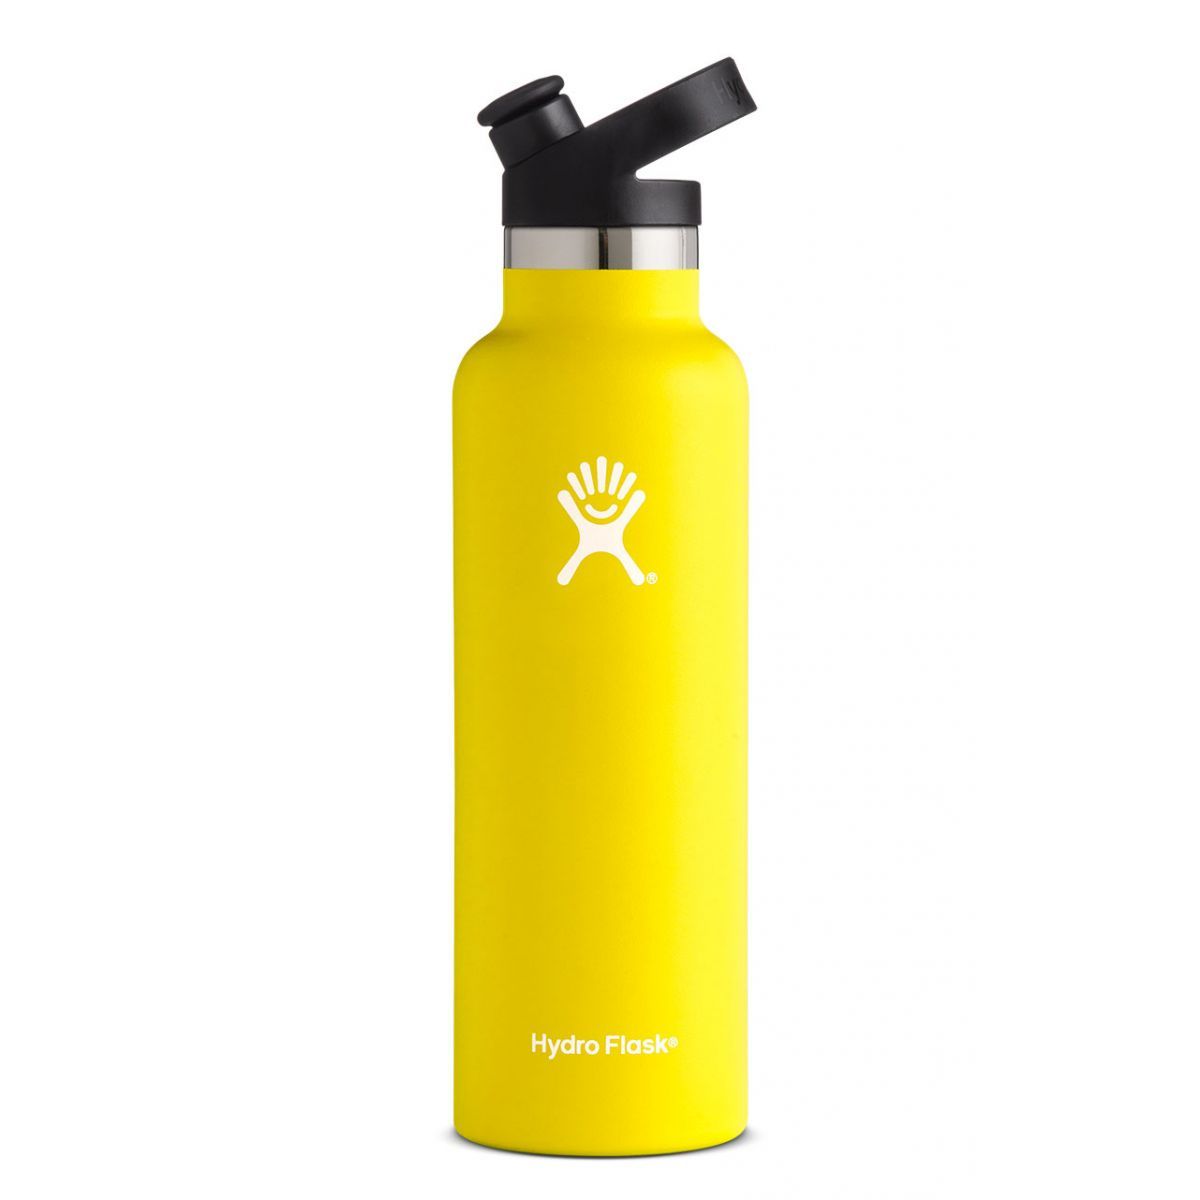 hydro flask off brand